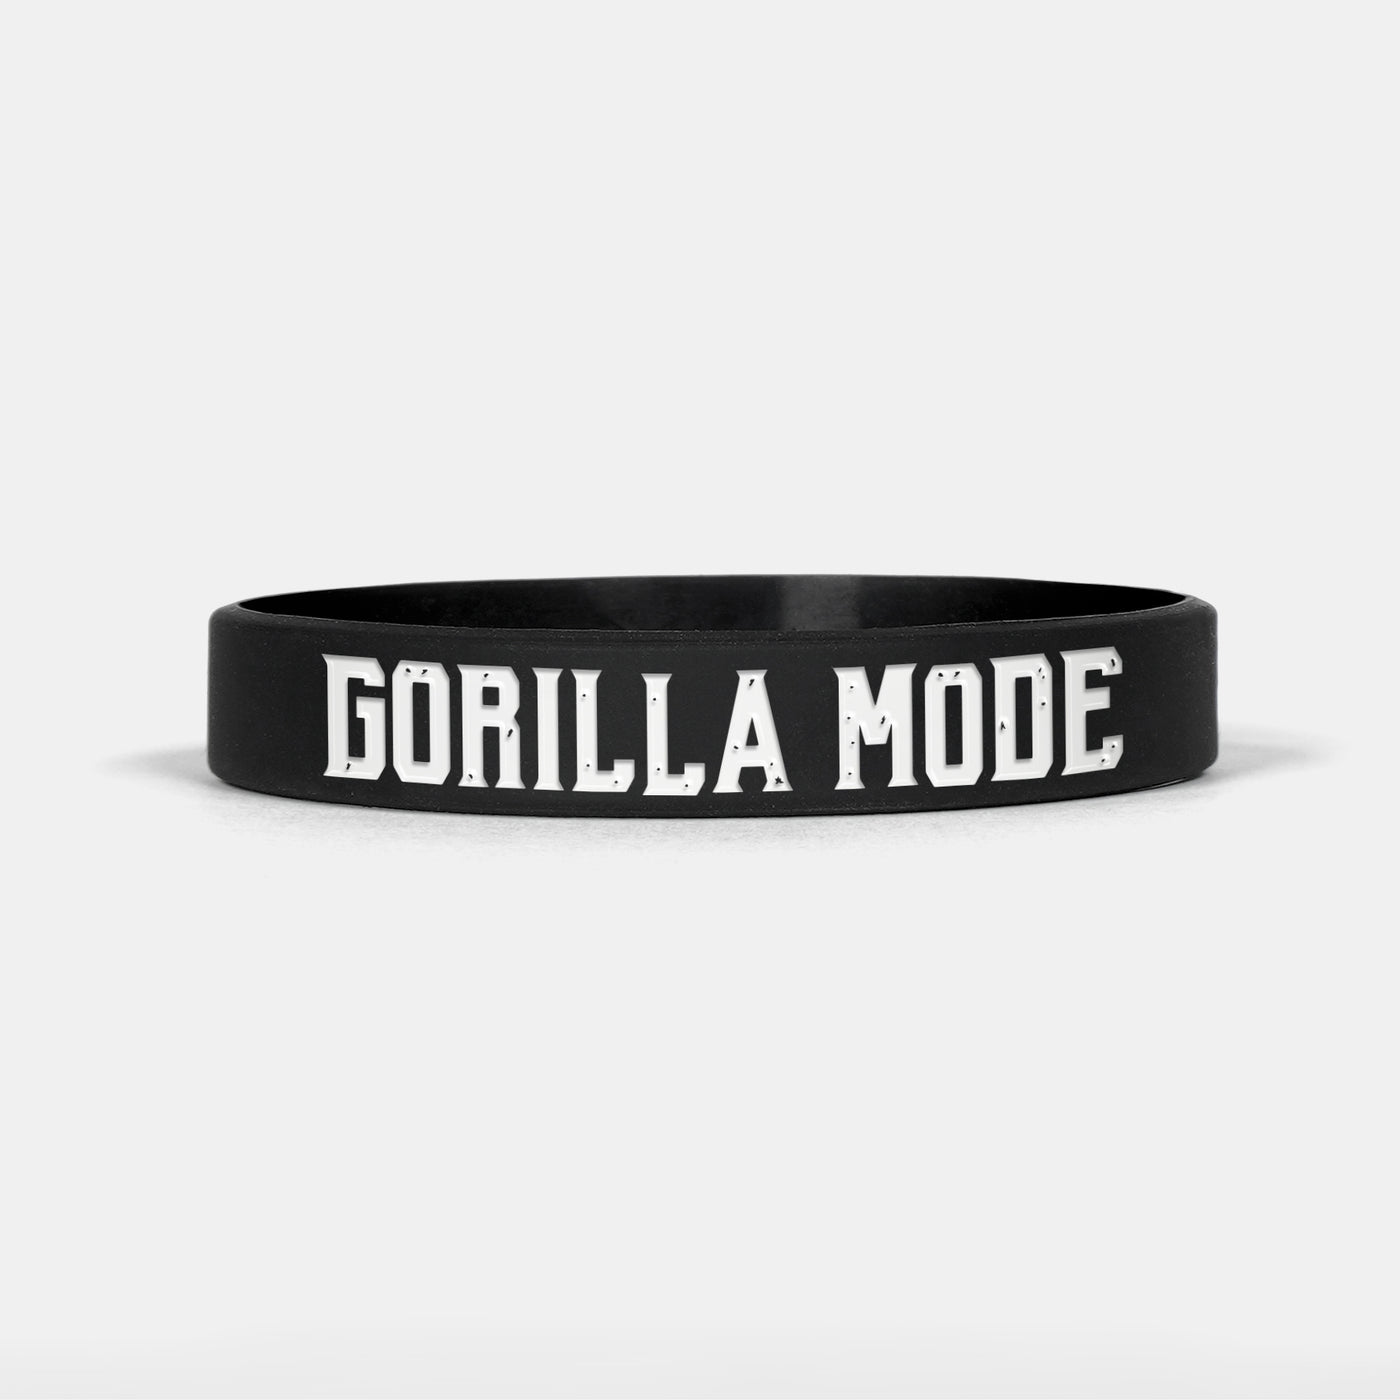 Gorilla Mode Motivational Wristband